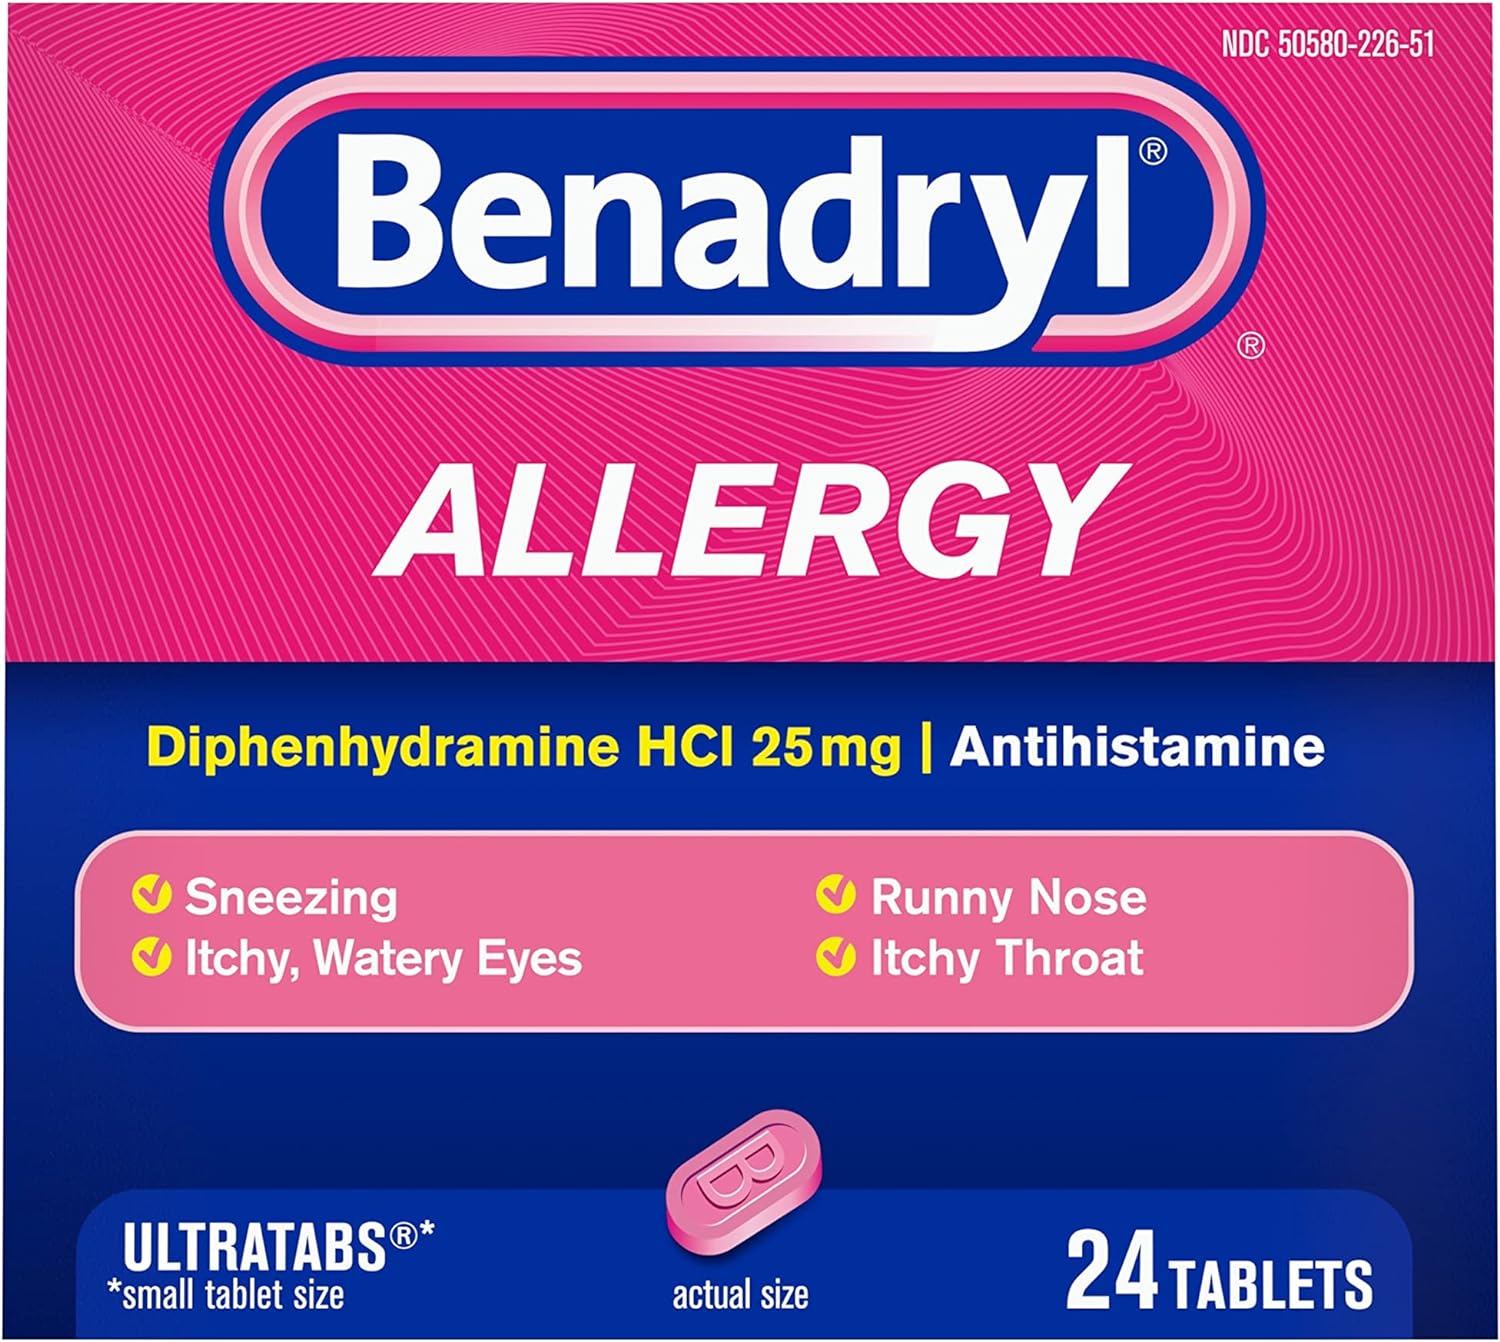 Benadryl Allergy Ultratabs Tablets, 24 Count ( Pack of 2 )